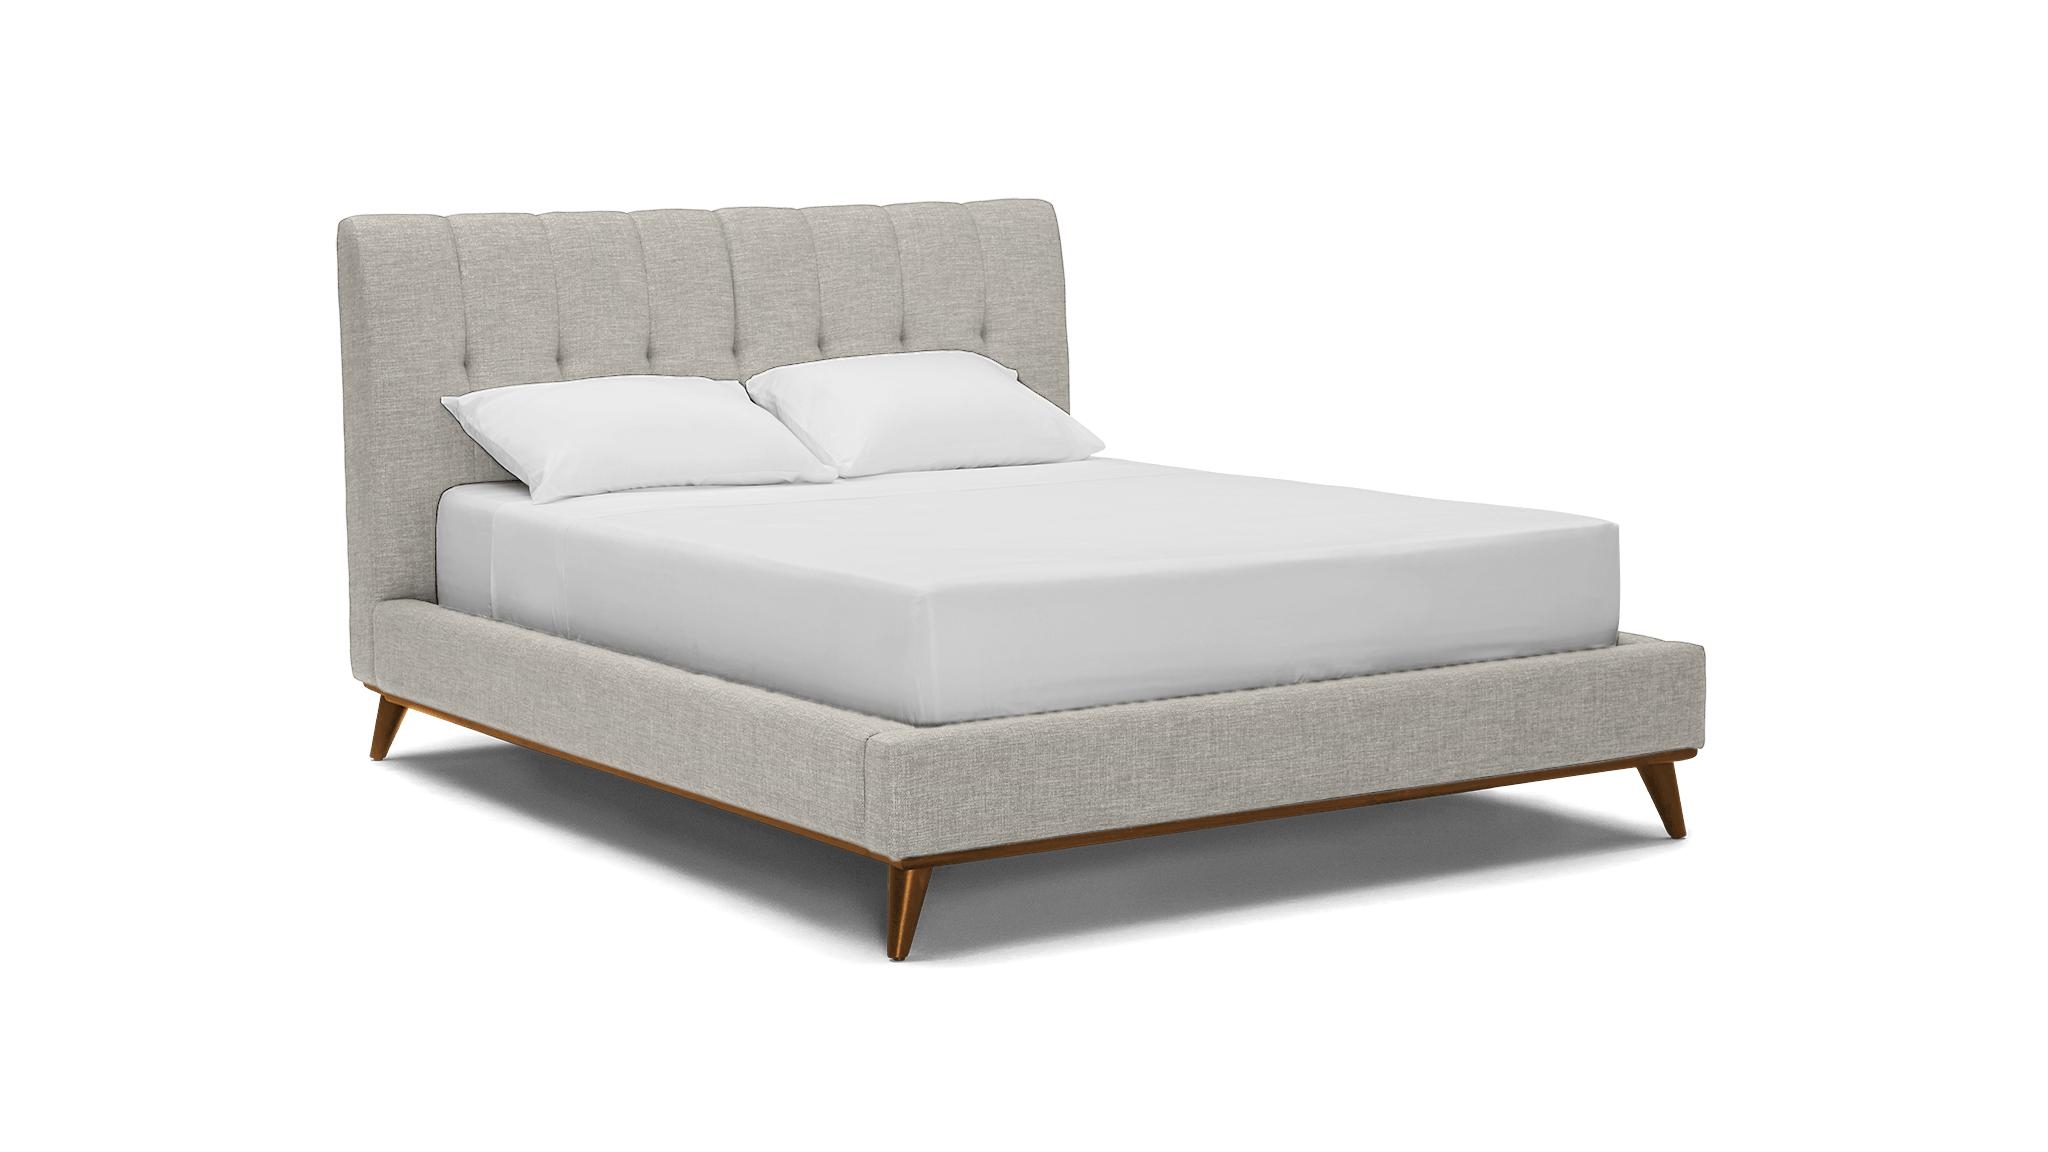 Gray Hughes Mid Century Modern Bed - Bloke Cotton - Mocha - Eastern King - Image 1